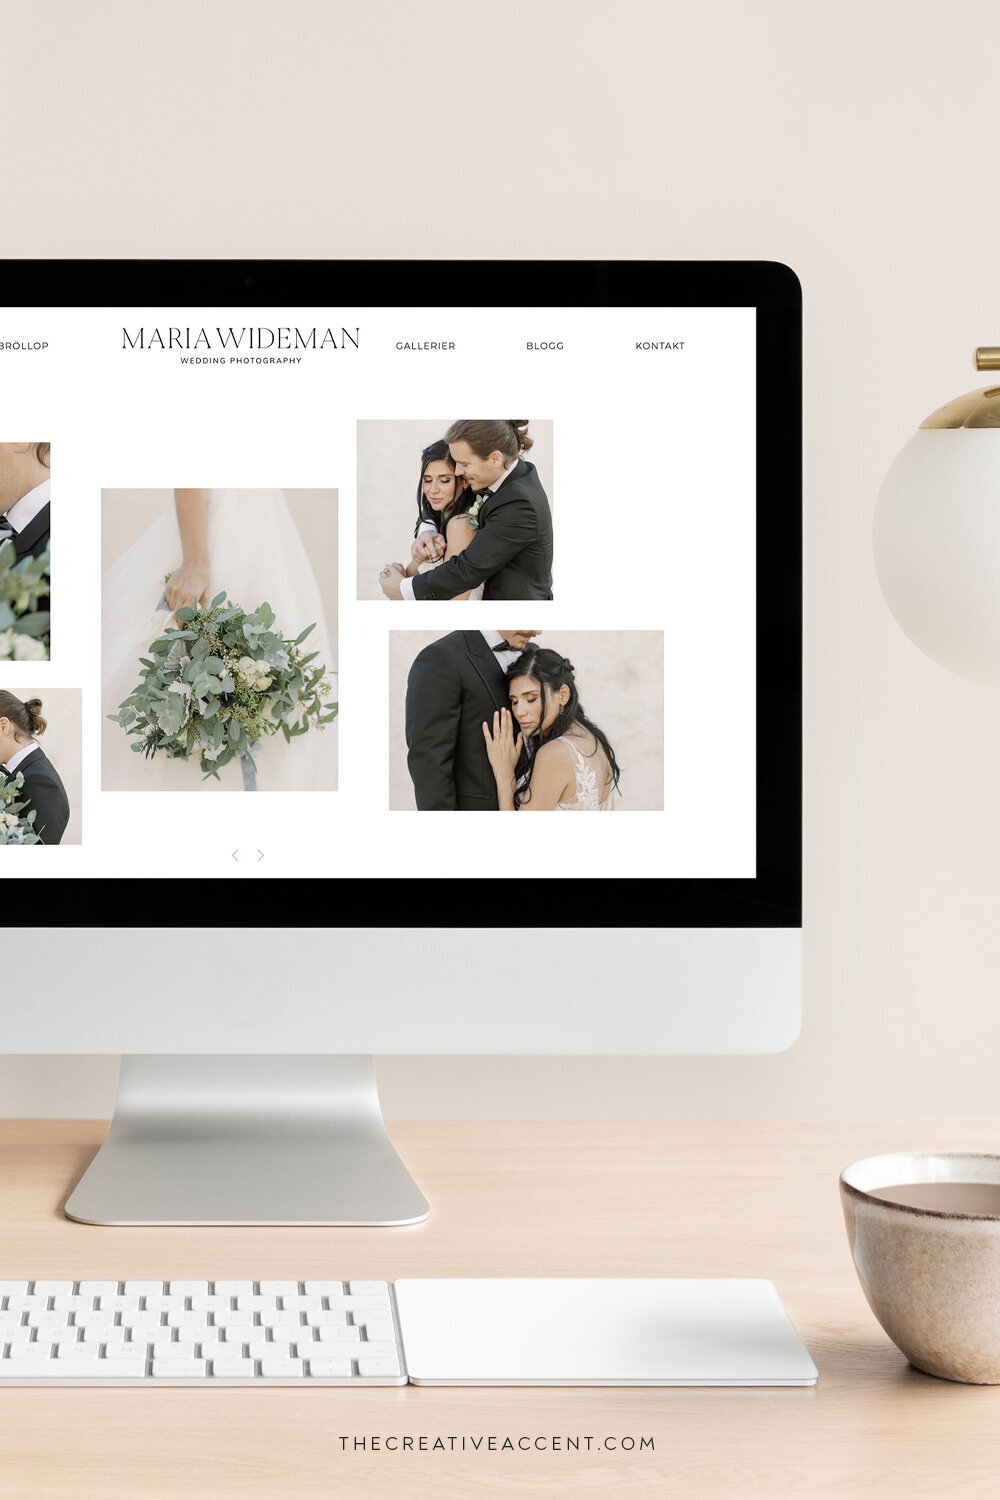 MW-wedding-photographer-website-design-5-web